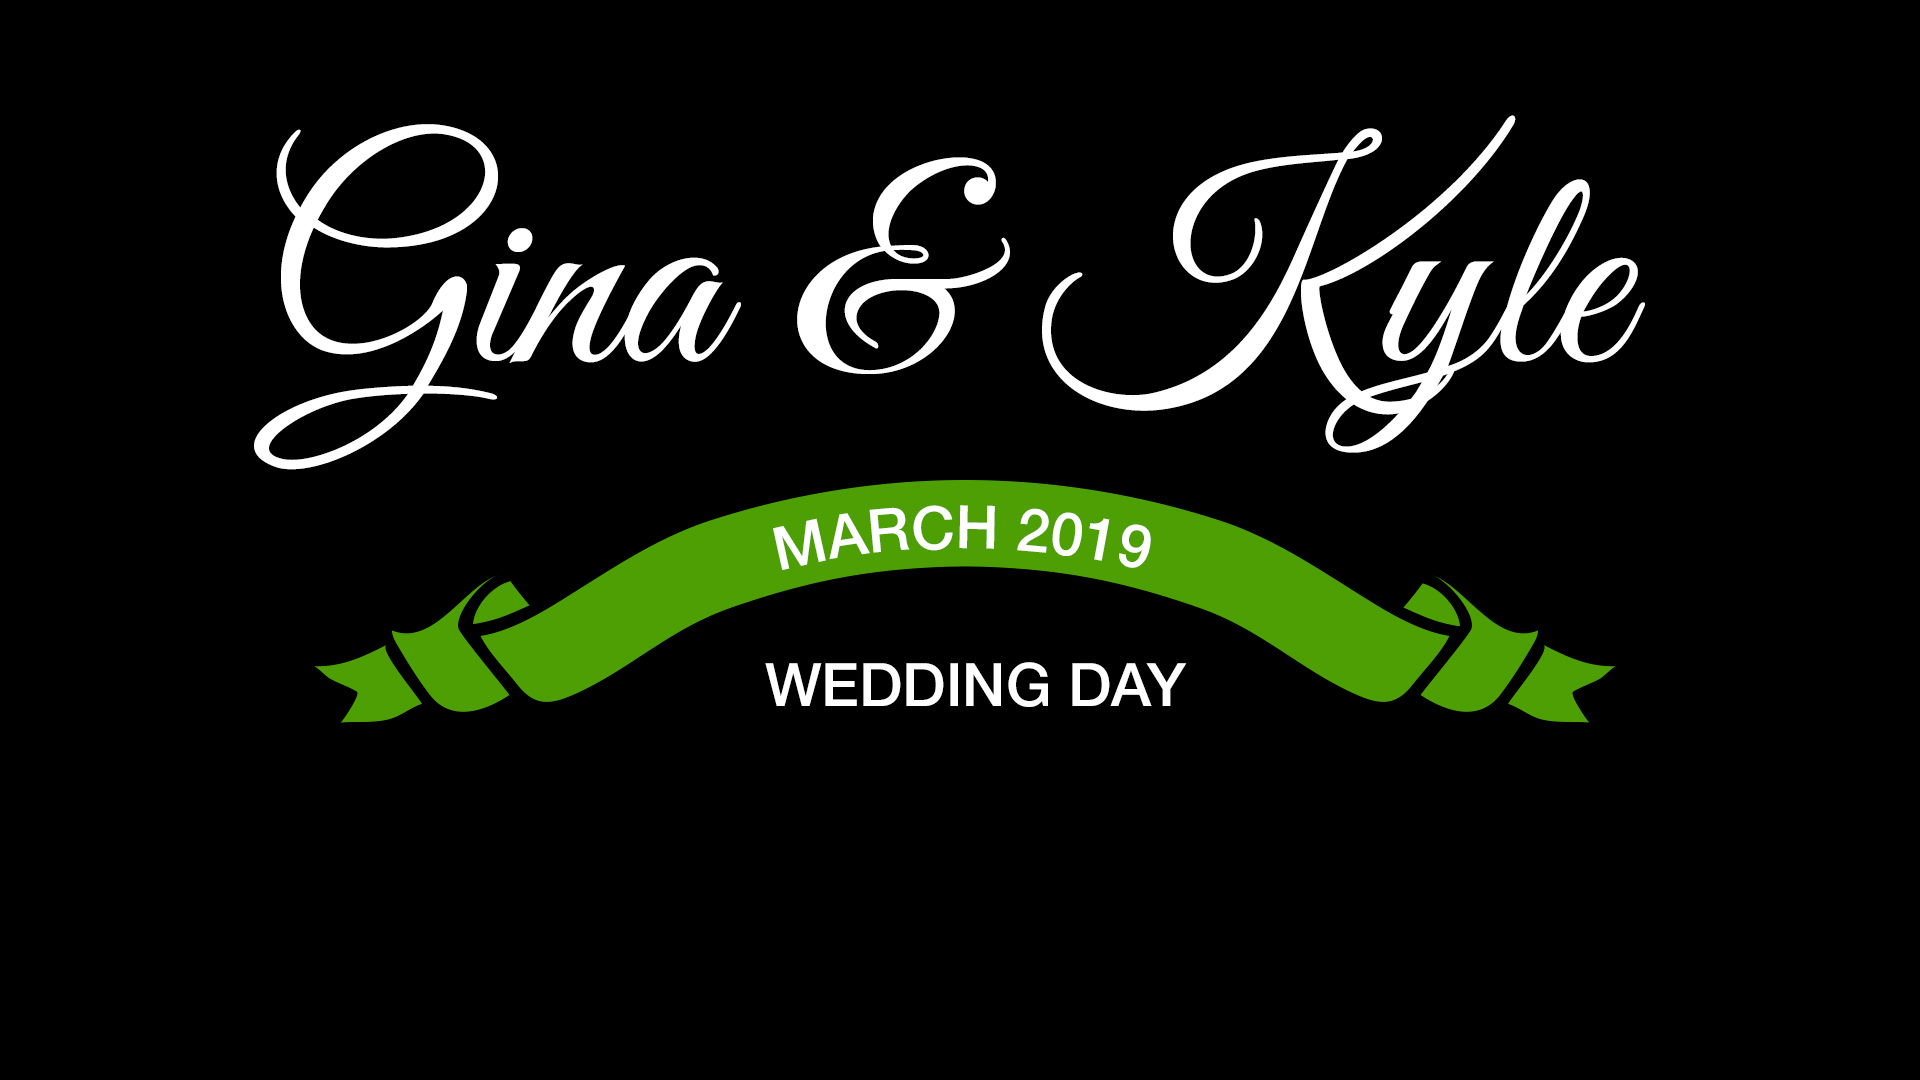 Gina & Kyle Wedding Testimonial